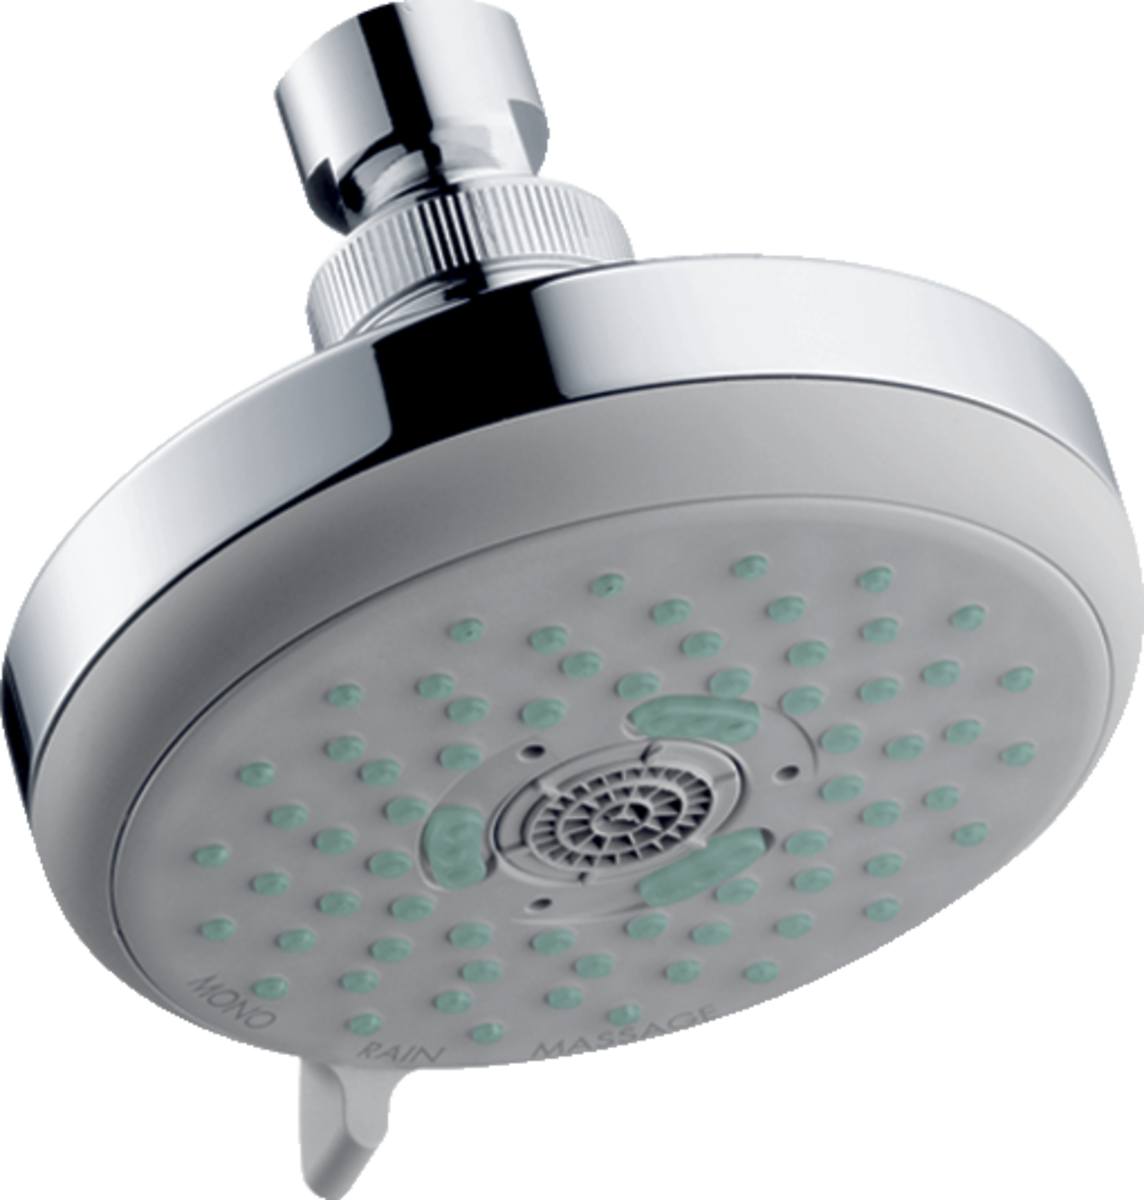 hansgrohe showers: Croma 100, 3 spray modes, Item No. | hansgrohe